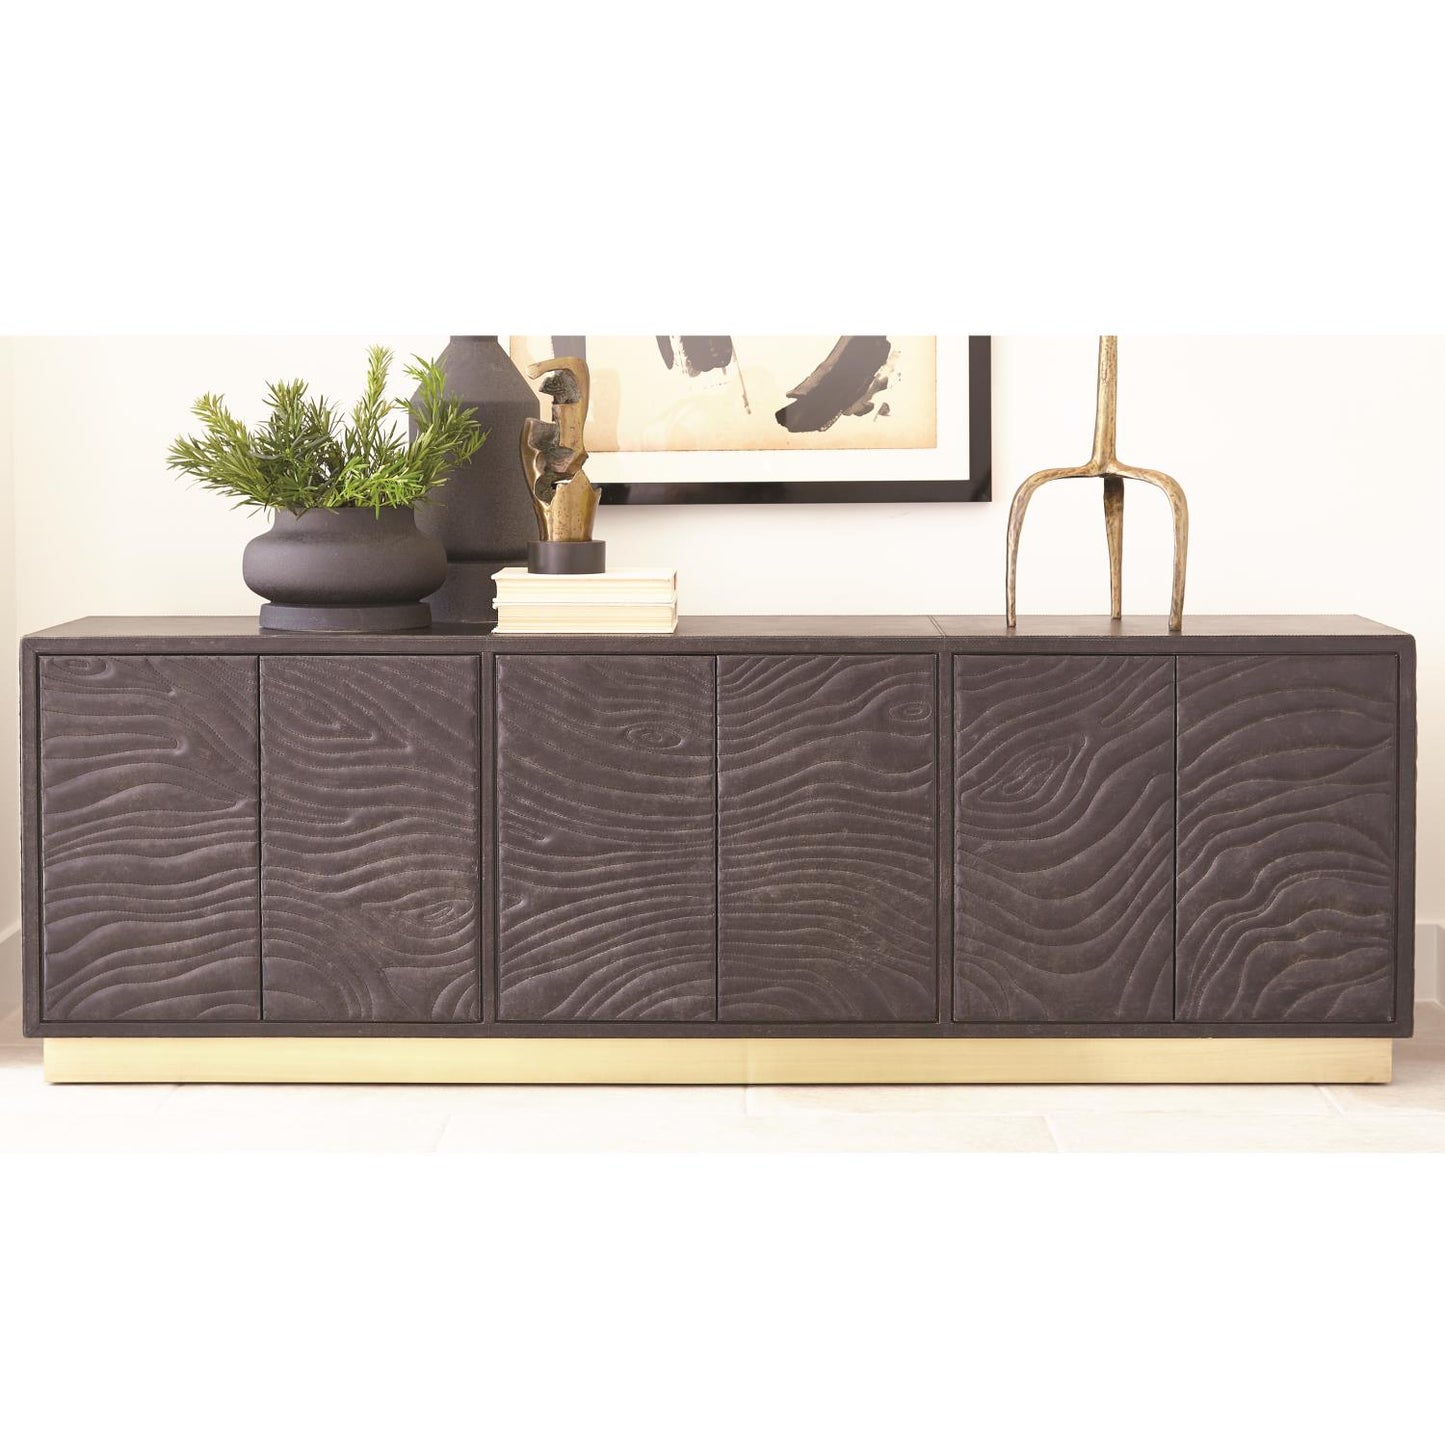 Forest Long Cabinet - Charcoal Leather - Grats Decor Interior Design & Build Inc.